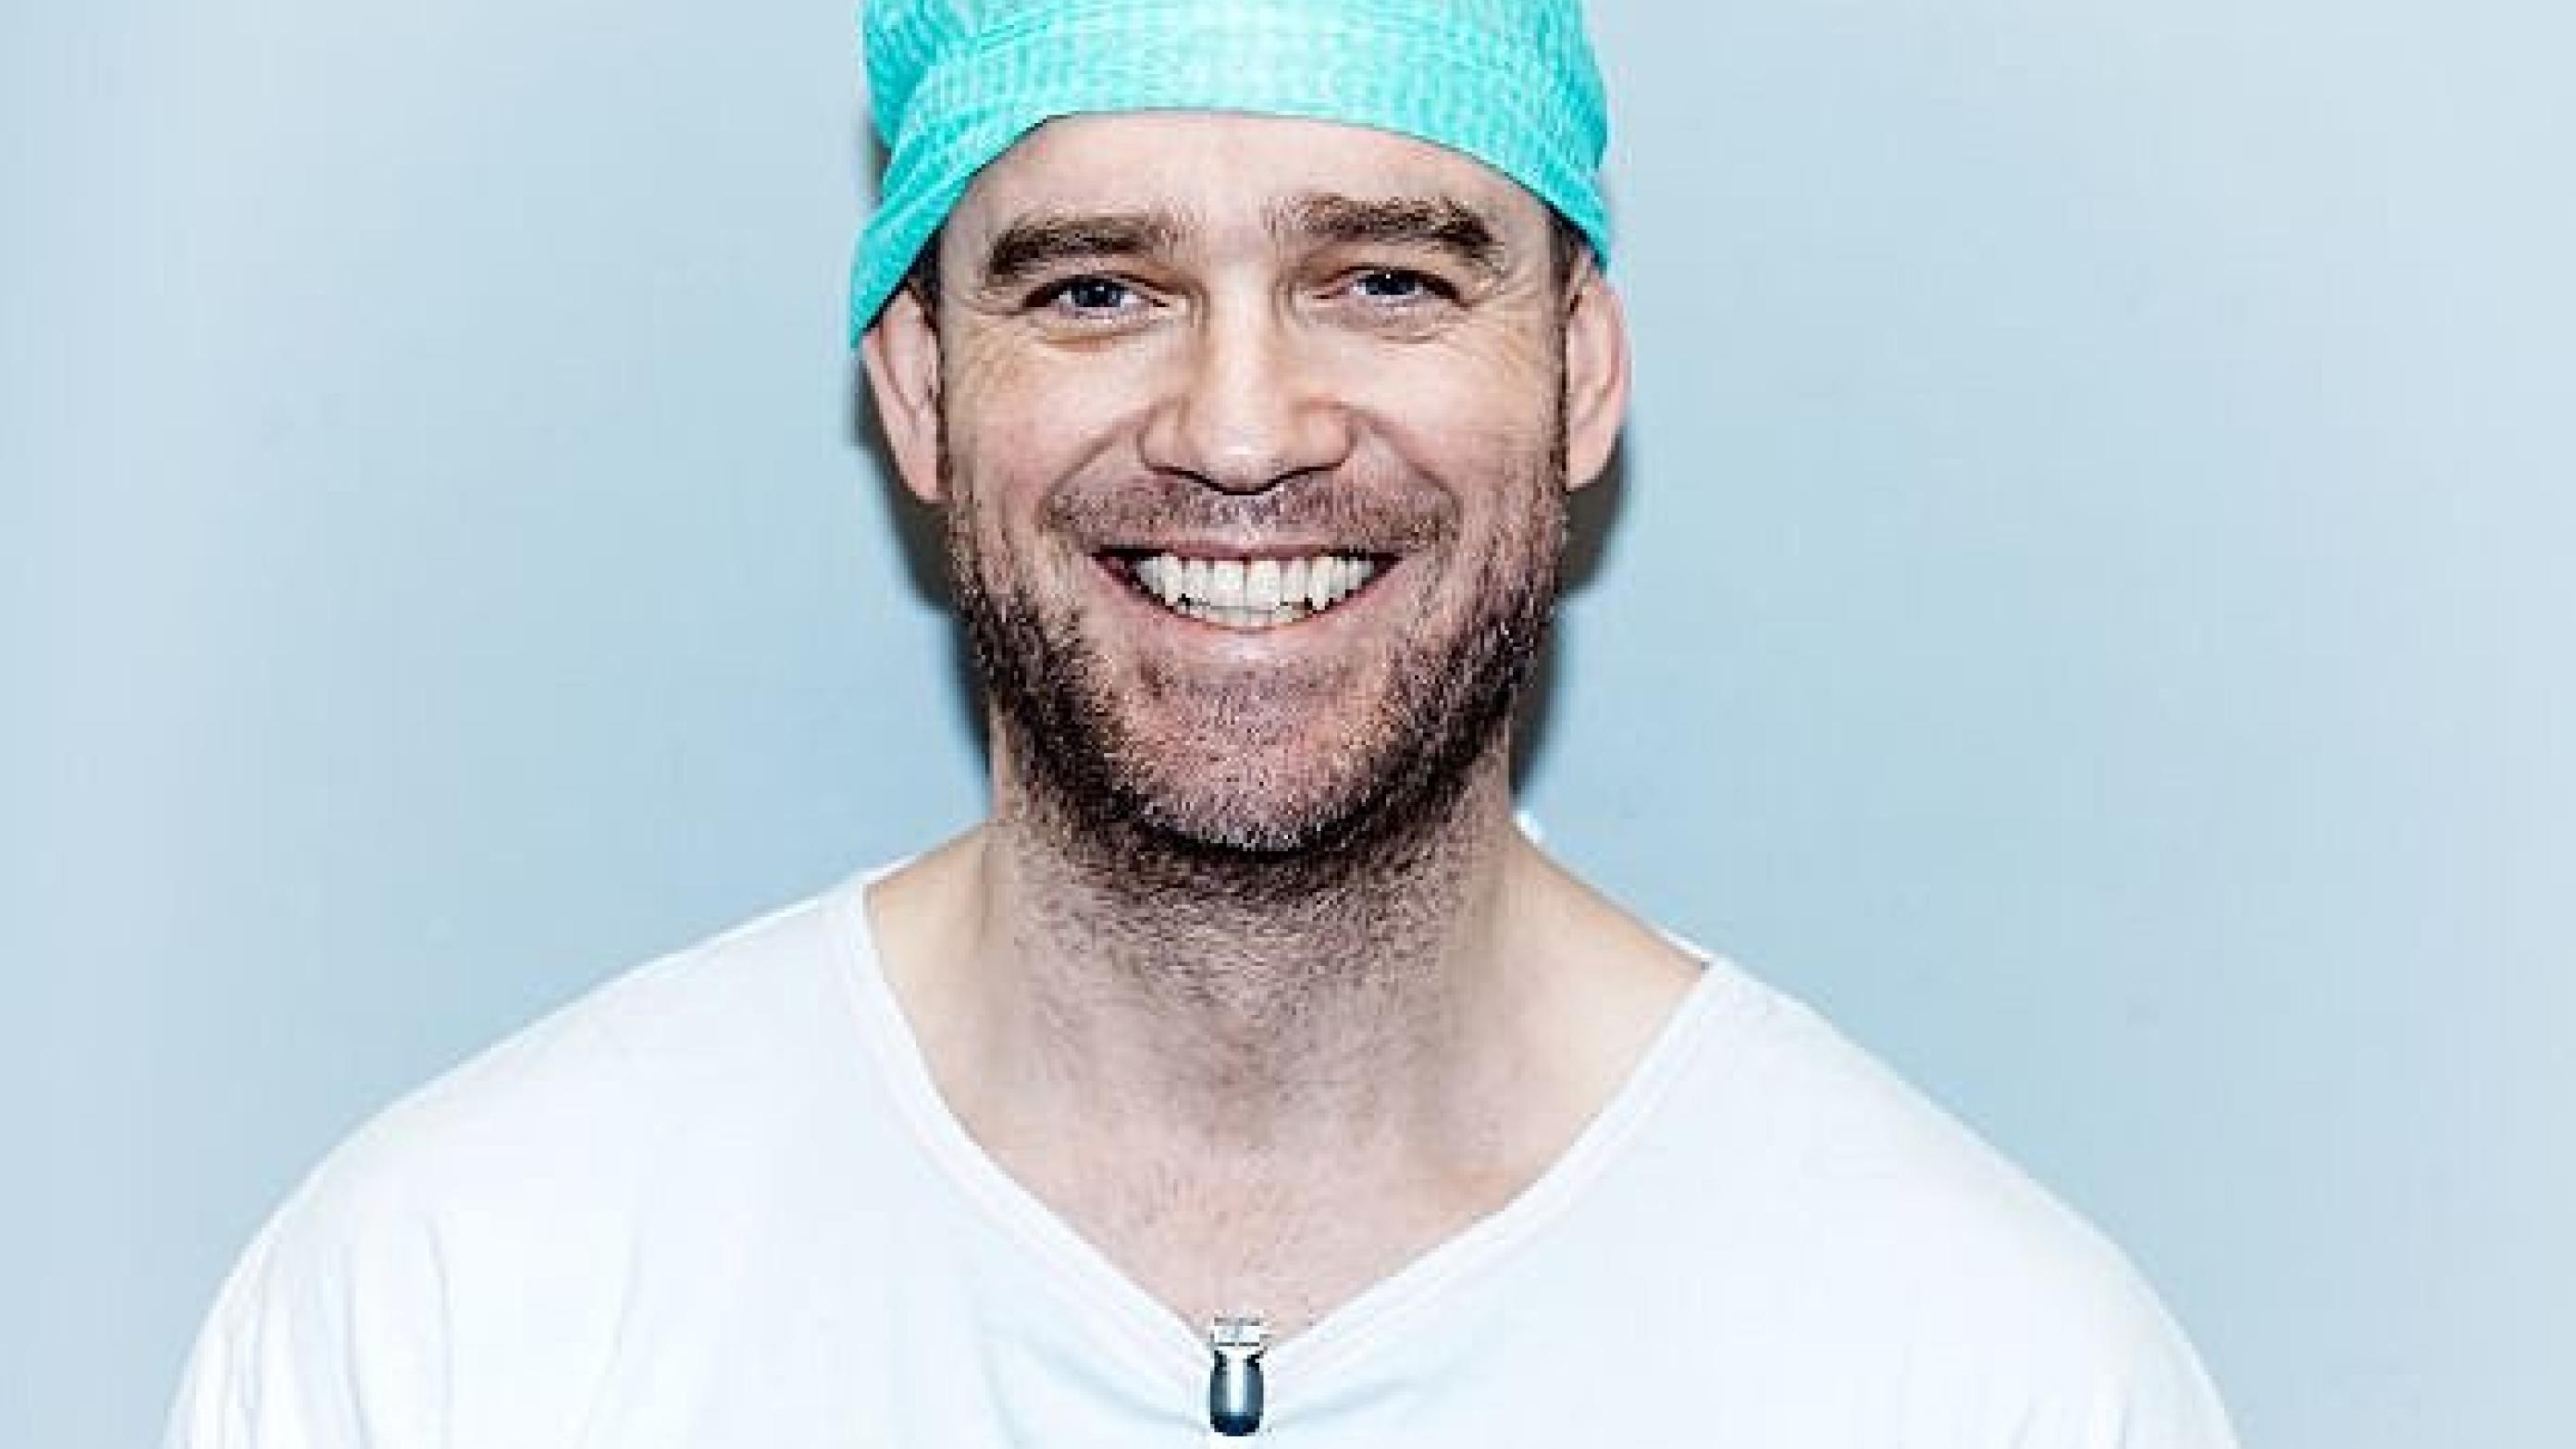 Anders Troelsen er 39 år, overlæge og professor i ortopædisk kirurgi på Hvidovre Hospital. Foto: Claus Boesen.